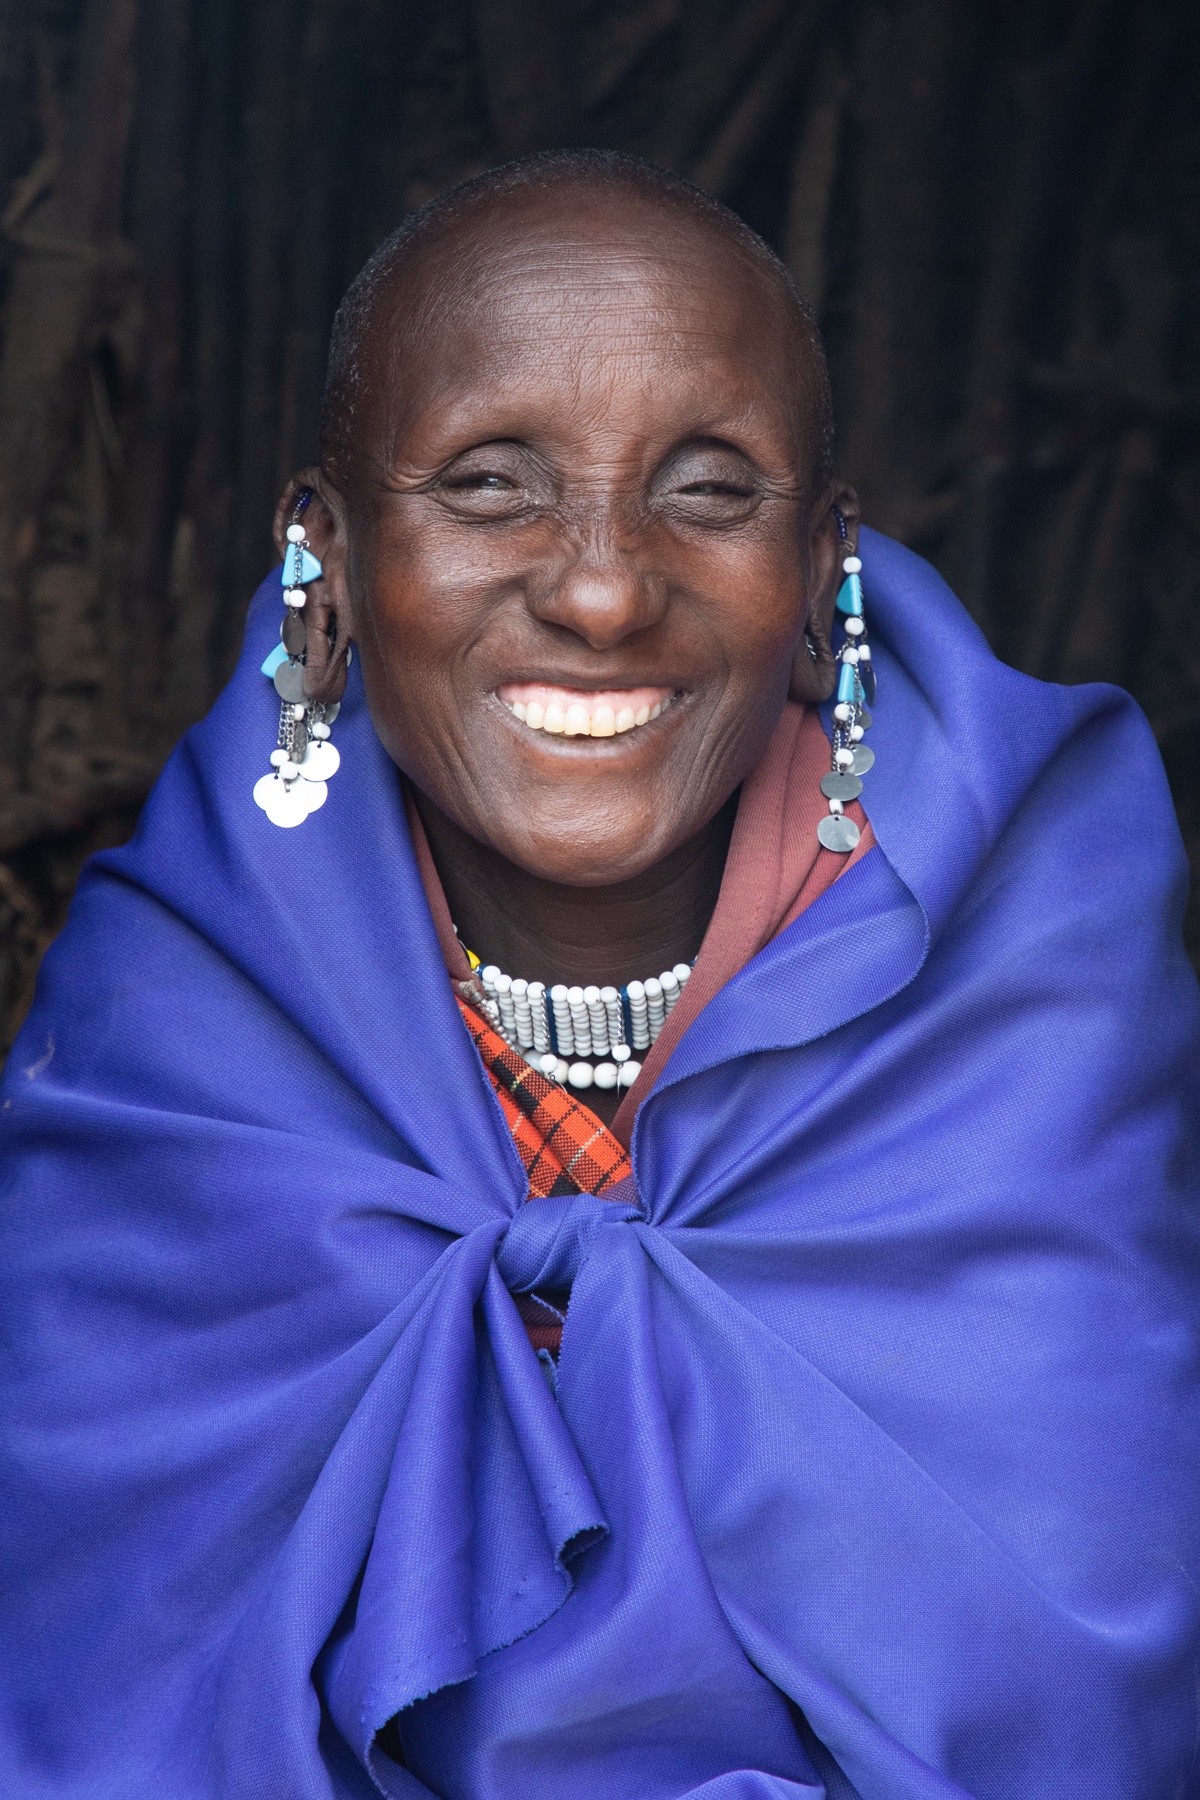 The warmest smile of an elderly Maasai woman at her boma near Ngorongoro